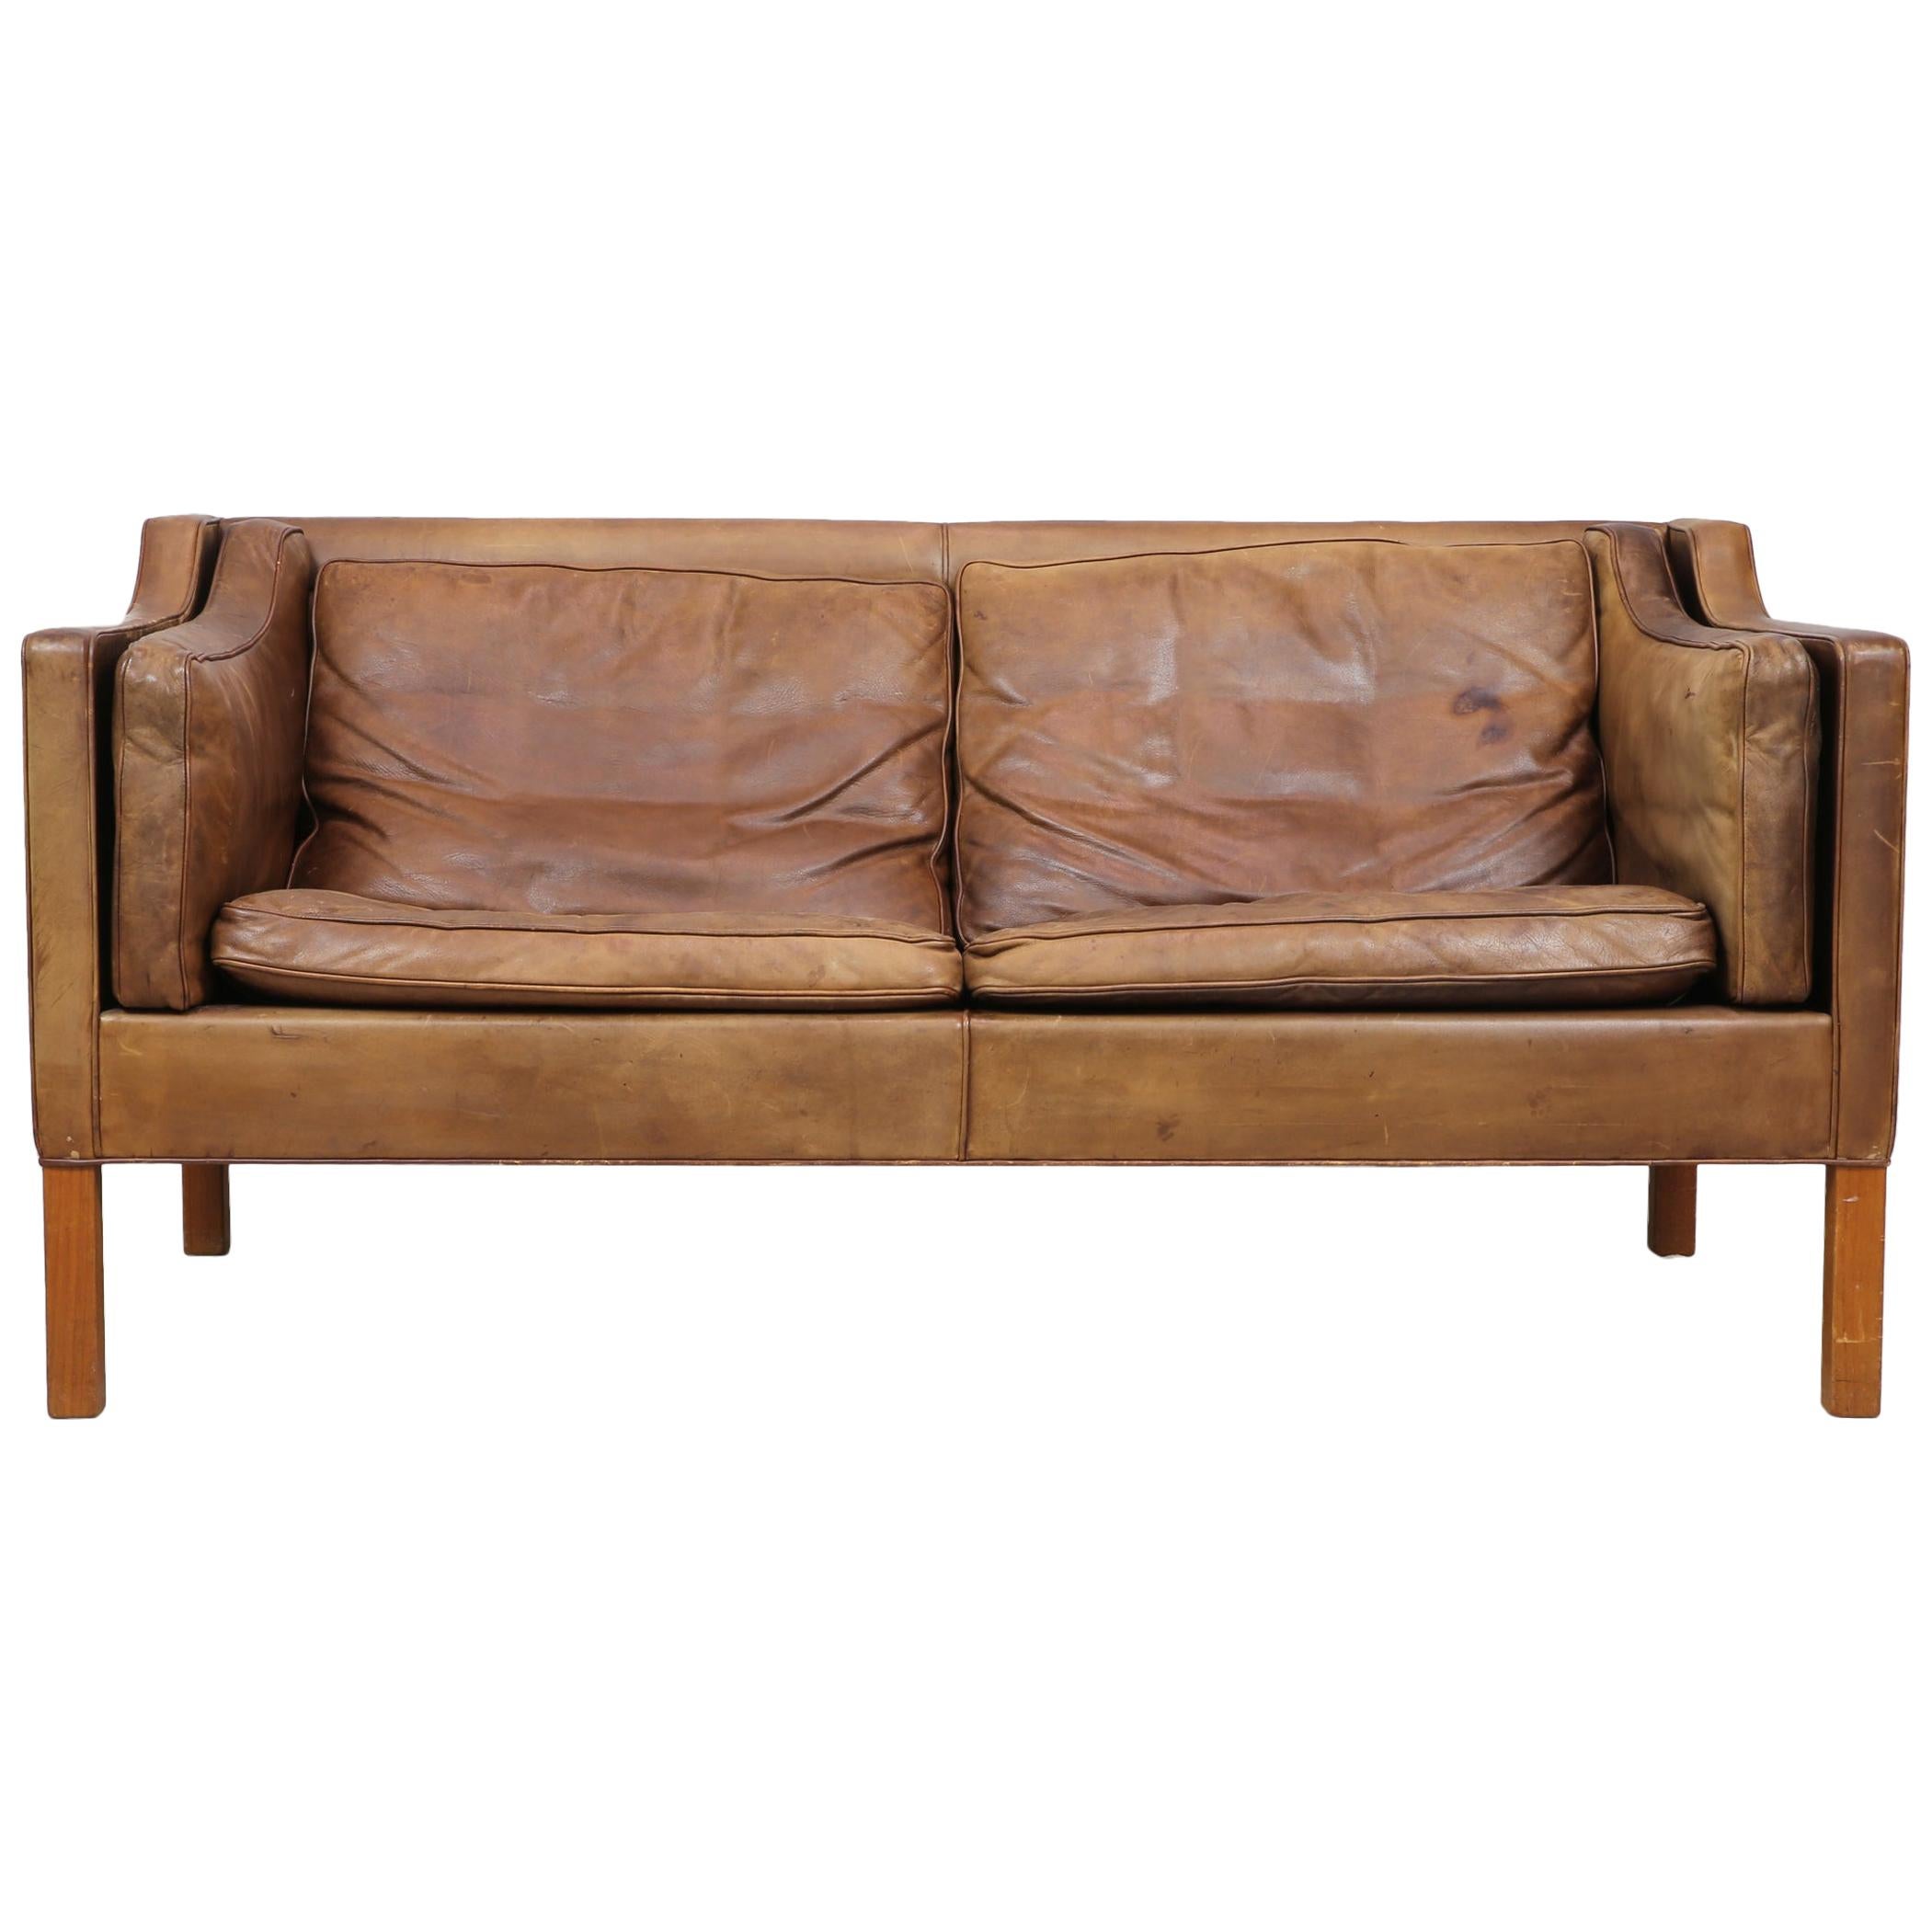 Original Borge Mogensen 2212 Sofa in Patinated Leather, Denmark, 1960s-1970s